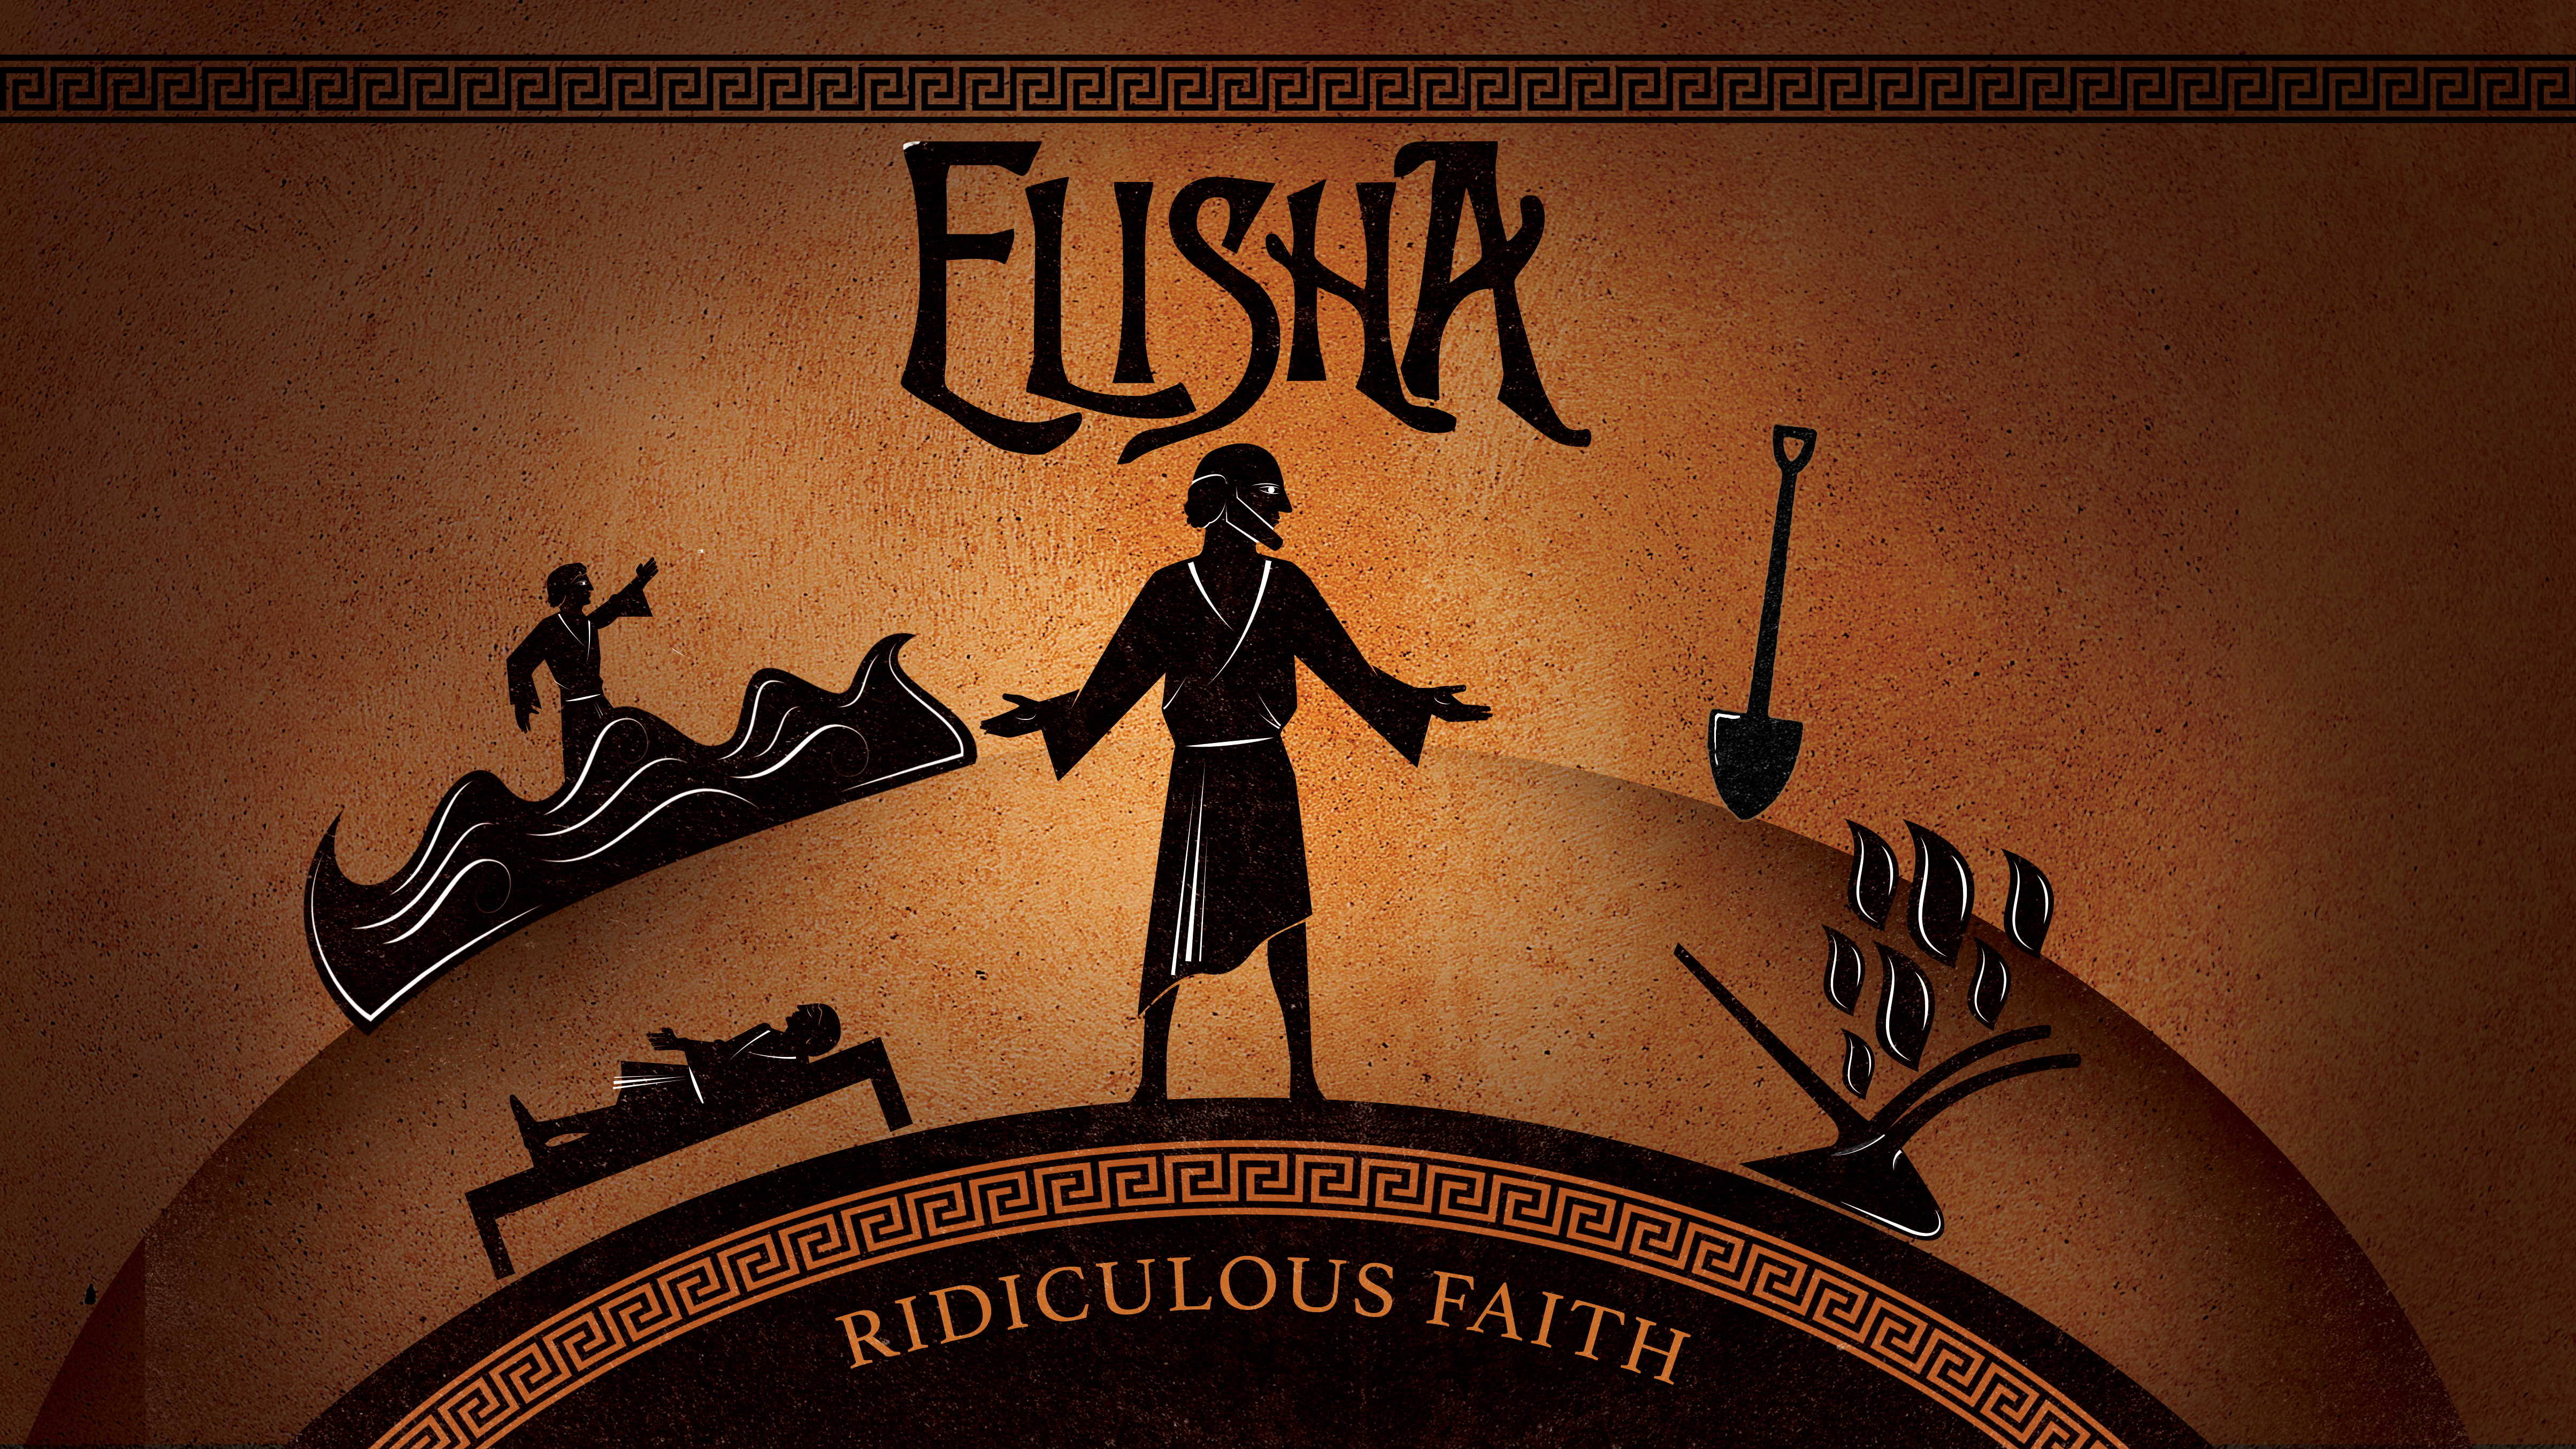 Elisha: Ridiculous Faith... Do the Dunk Image